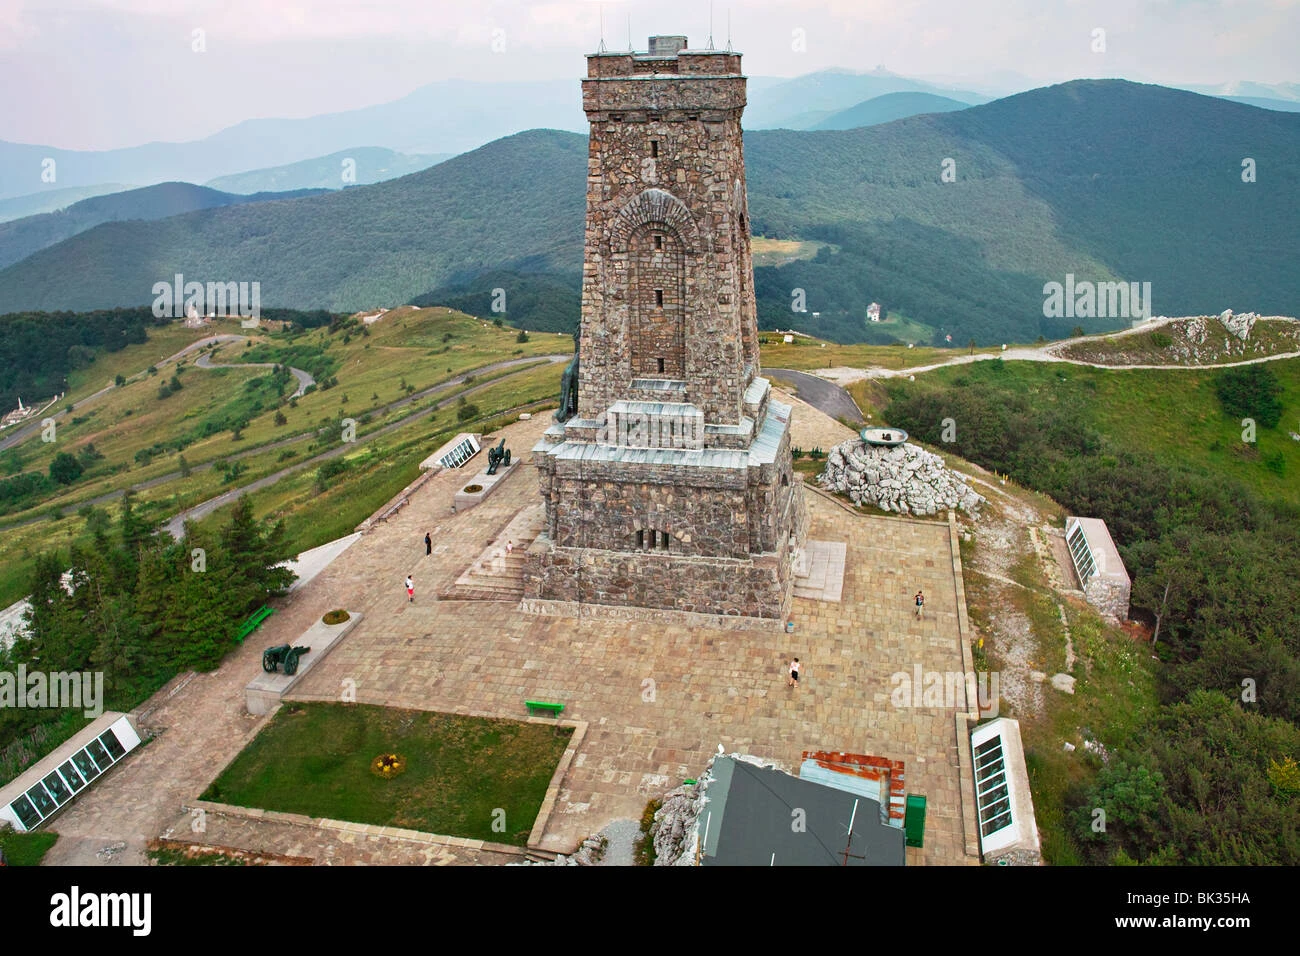 577-aerial-view-of-the-shipka-monument-in-the-balkan-mountains-bulgaria-bk35ha-17135198662487.jpg